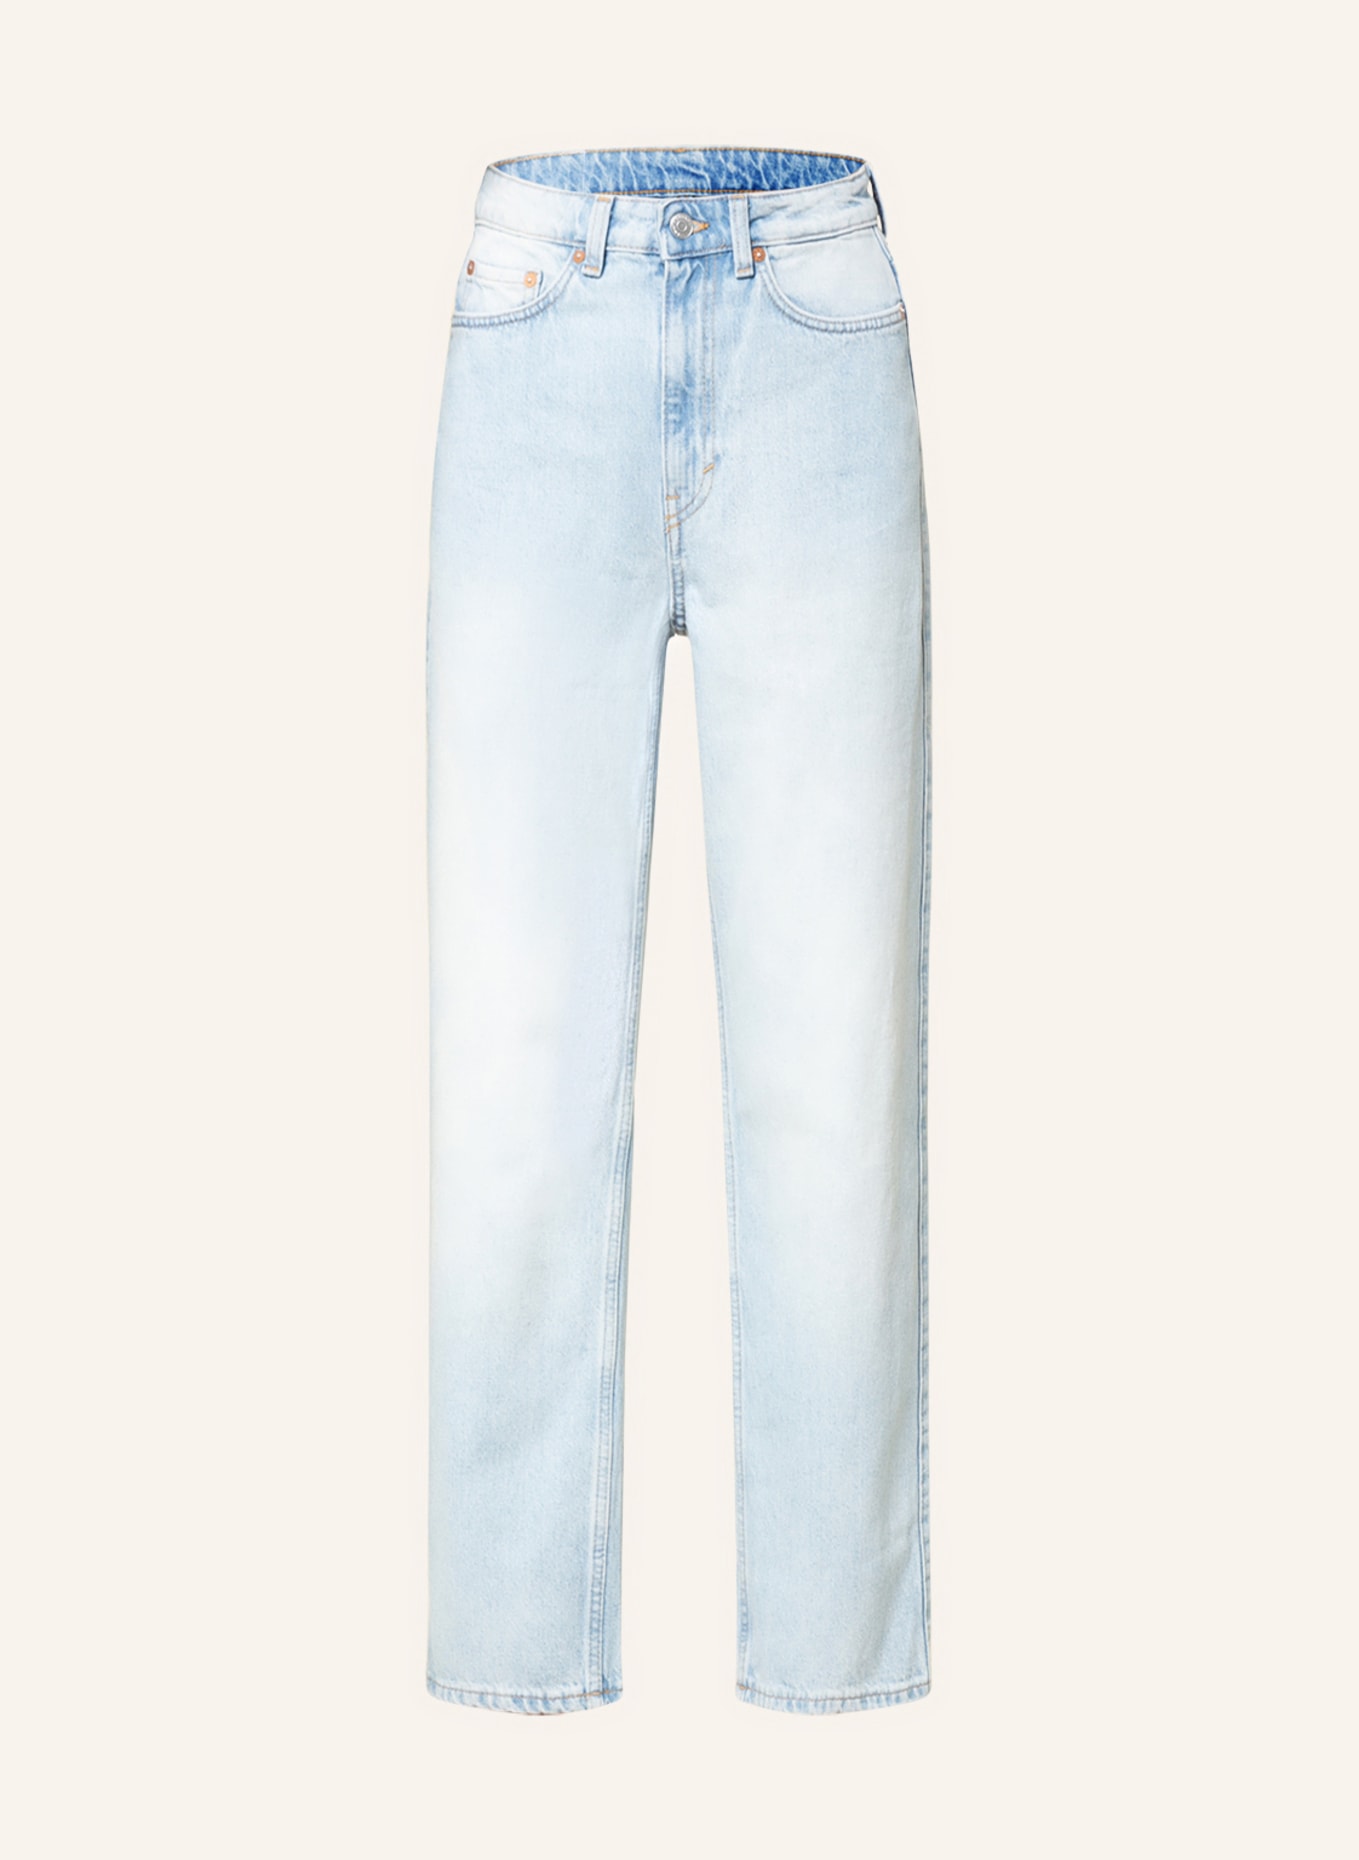 WEEKDAY Straight Jeans ROWE, Farbe: 019 Blue Dusty light fresh blue (Bild 1)